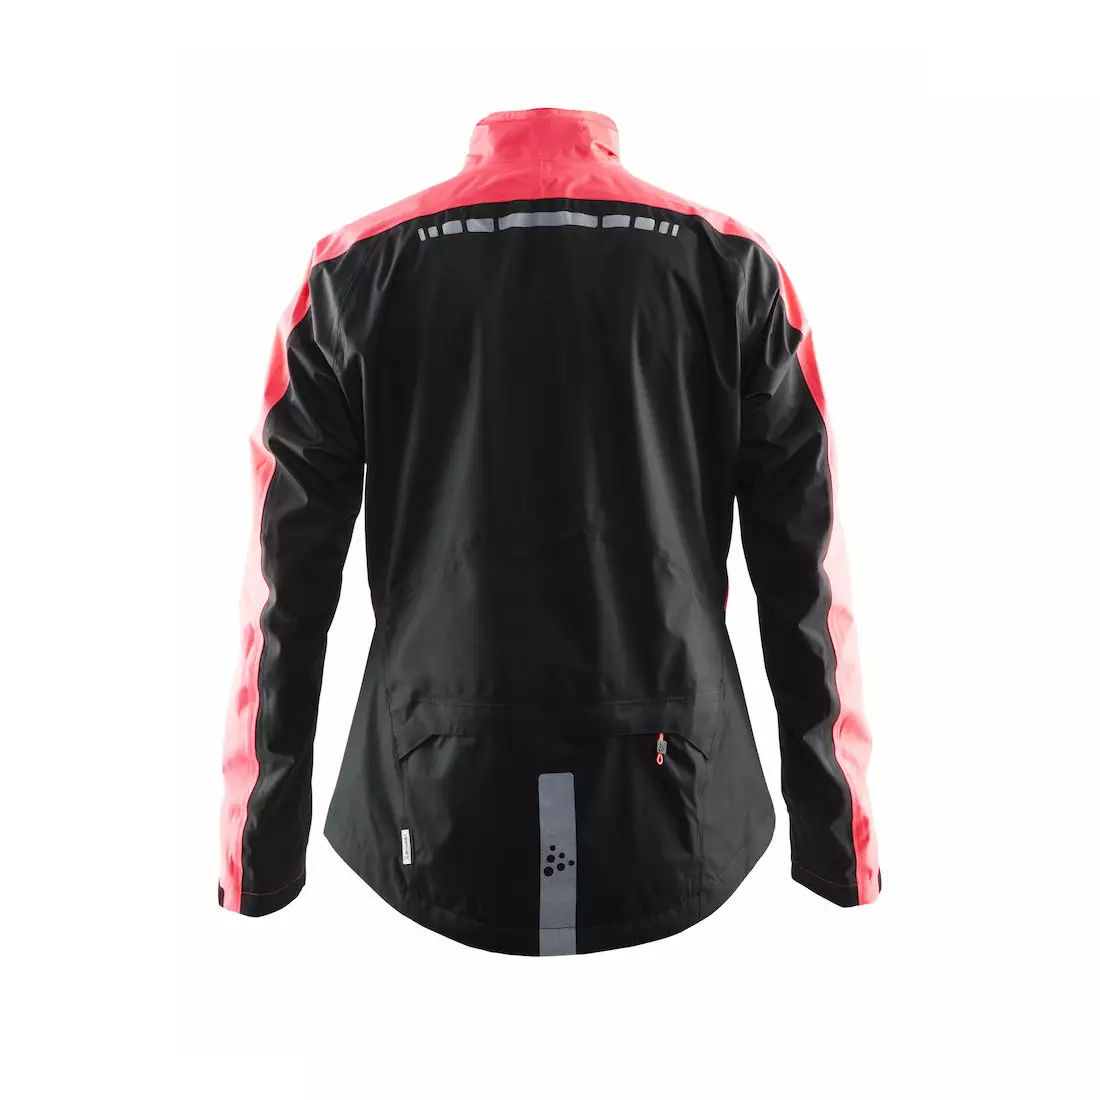 CRAFT ESCAPE women's rainproof cycling jacket 1903807-2410